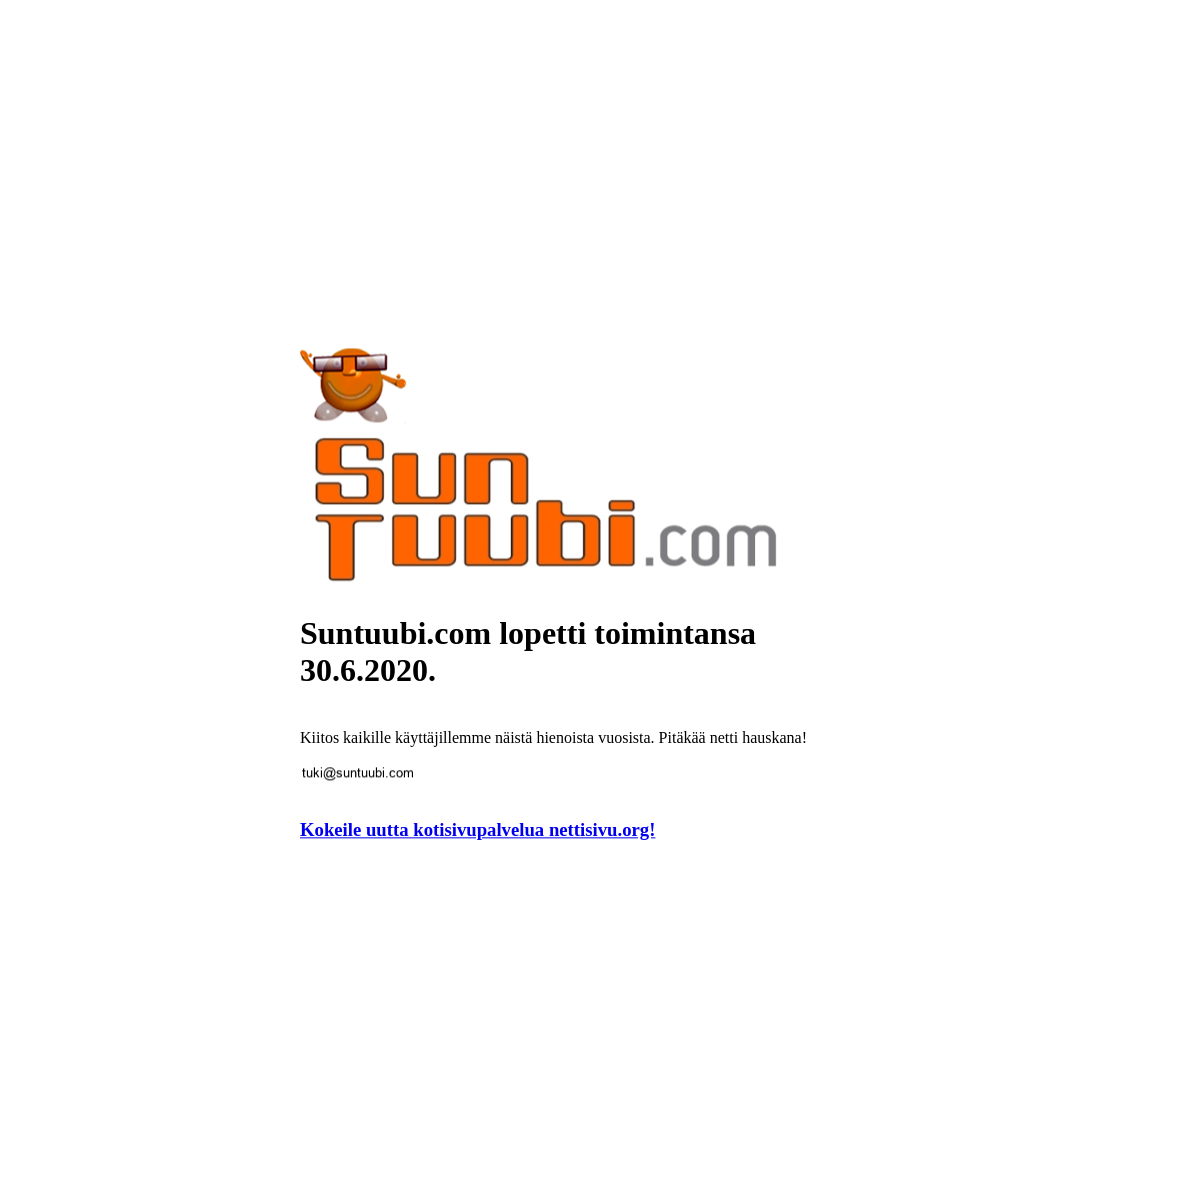 A complete backup of suntuubi.com